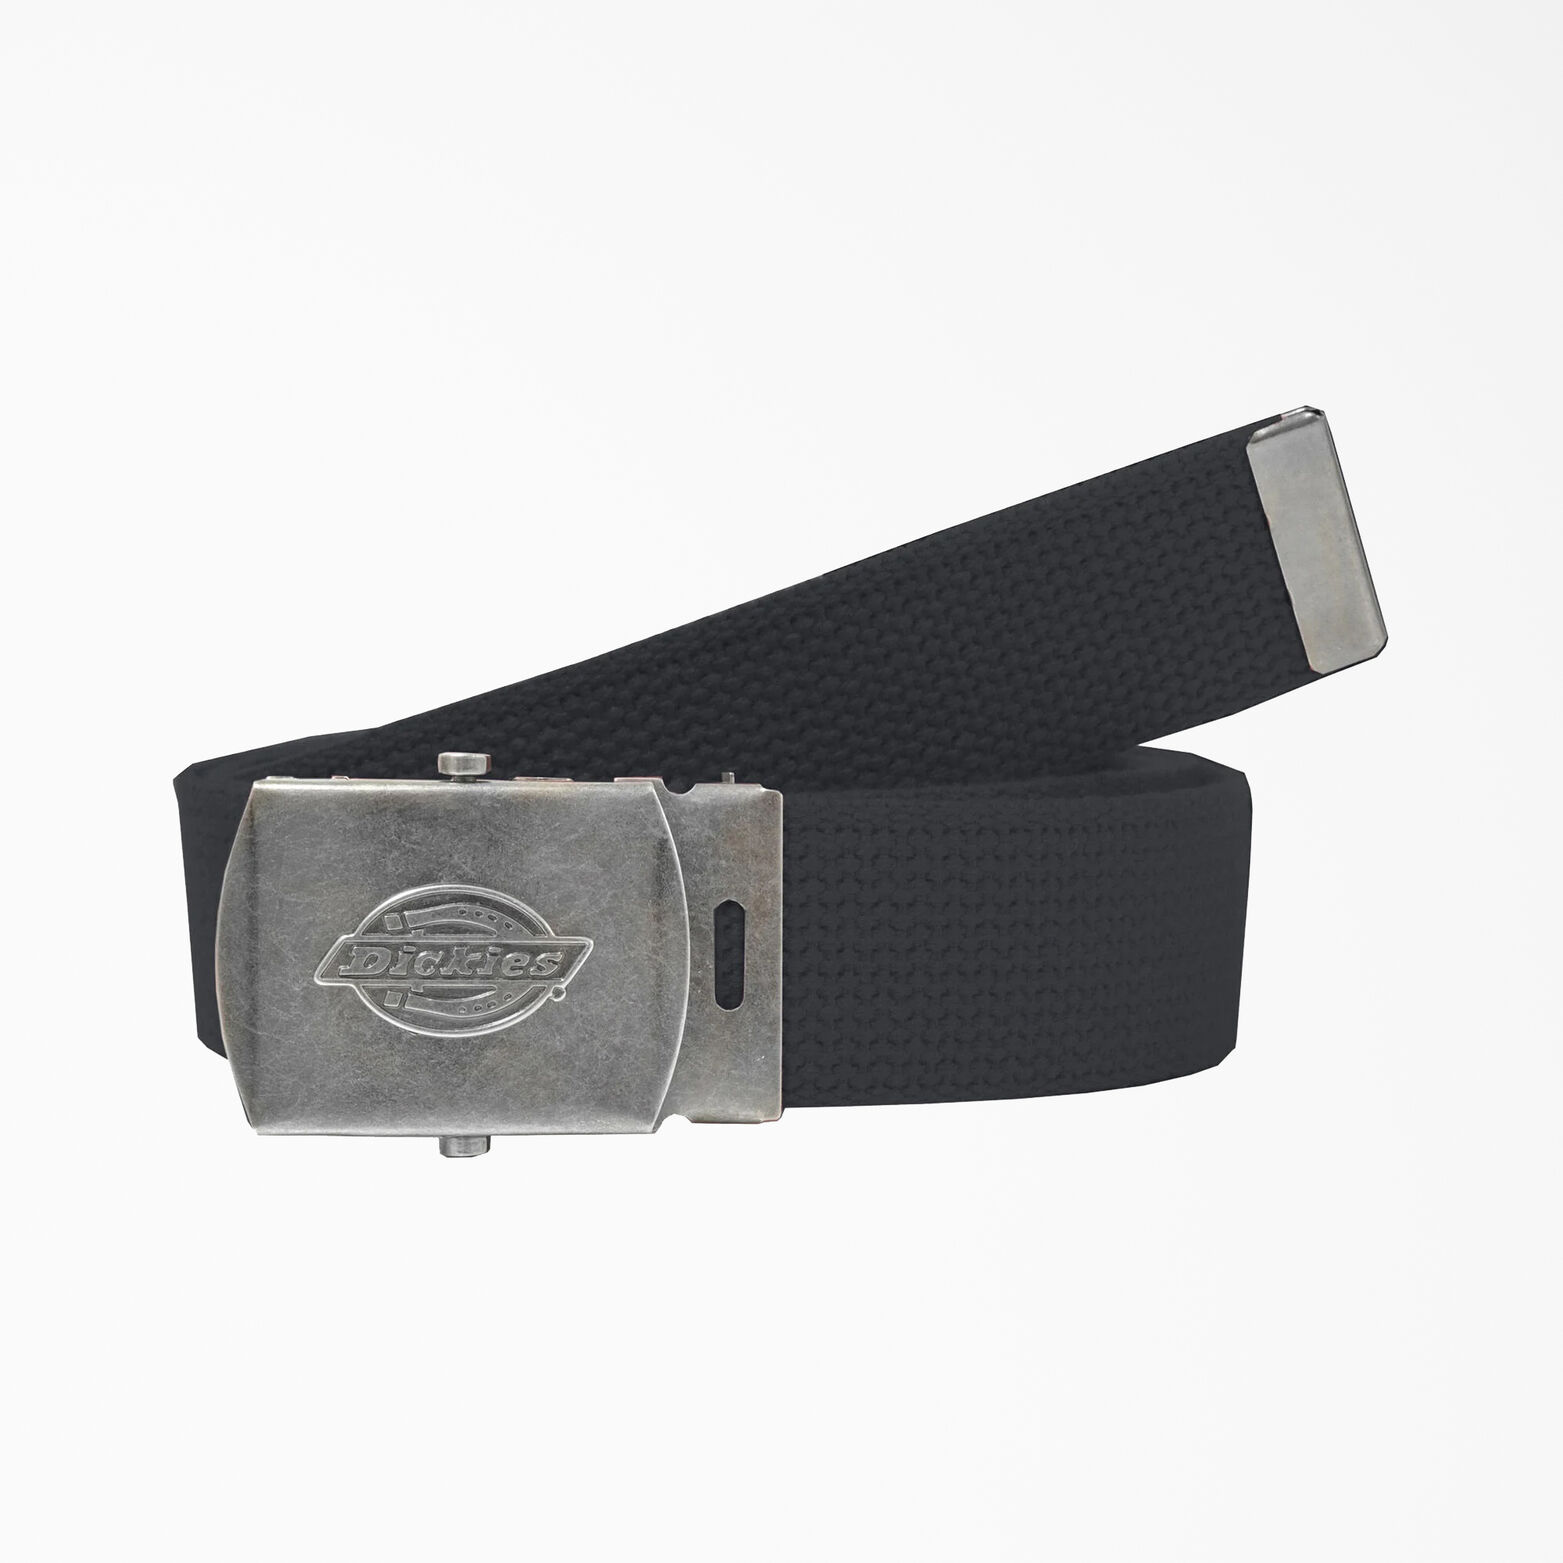 Horseshoe buckle black 30 mm leather belt - Luxury Belts